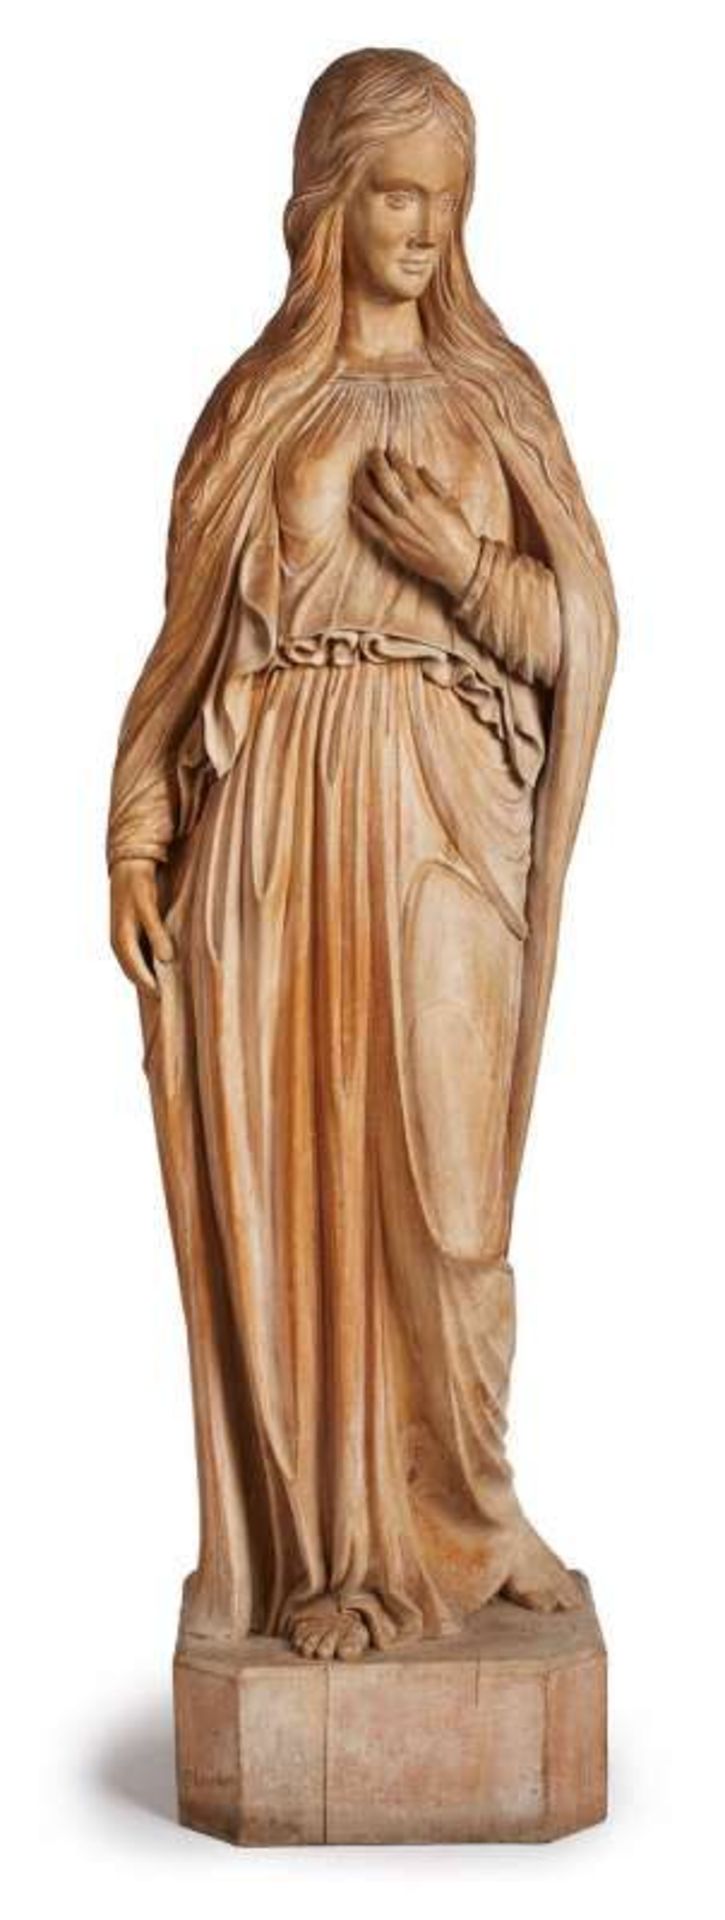 Gr. Standfigur Maria Magdalena, Nazarener-Stil, um 1900. Lindenholz, vollrd. geschnitzt.